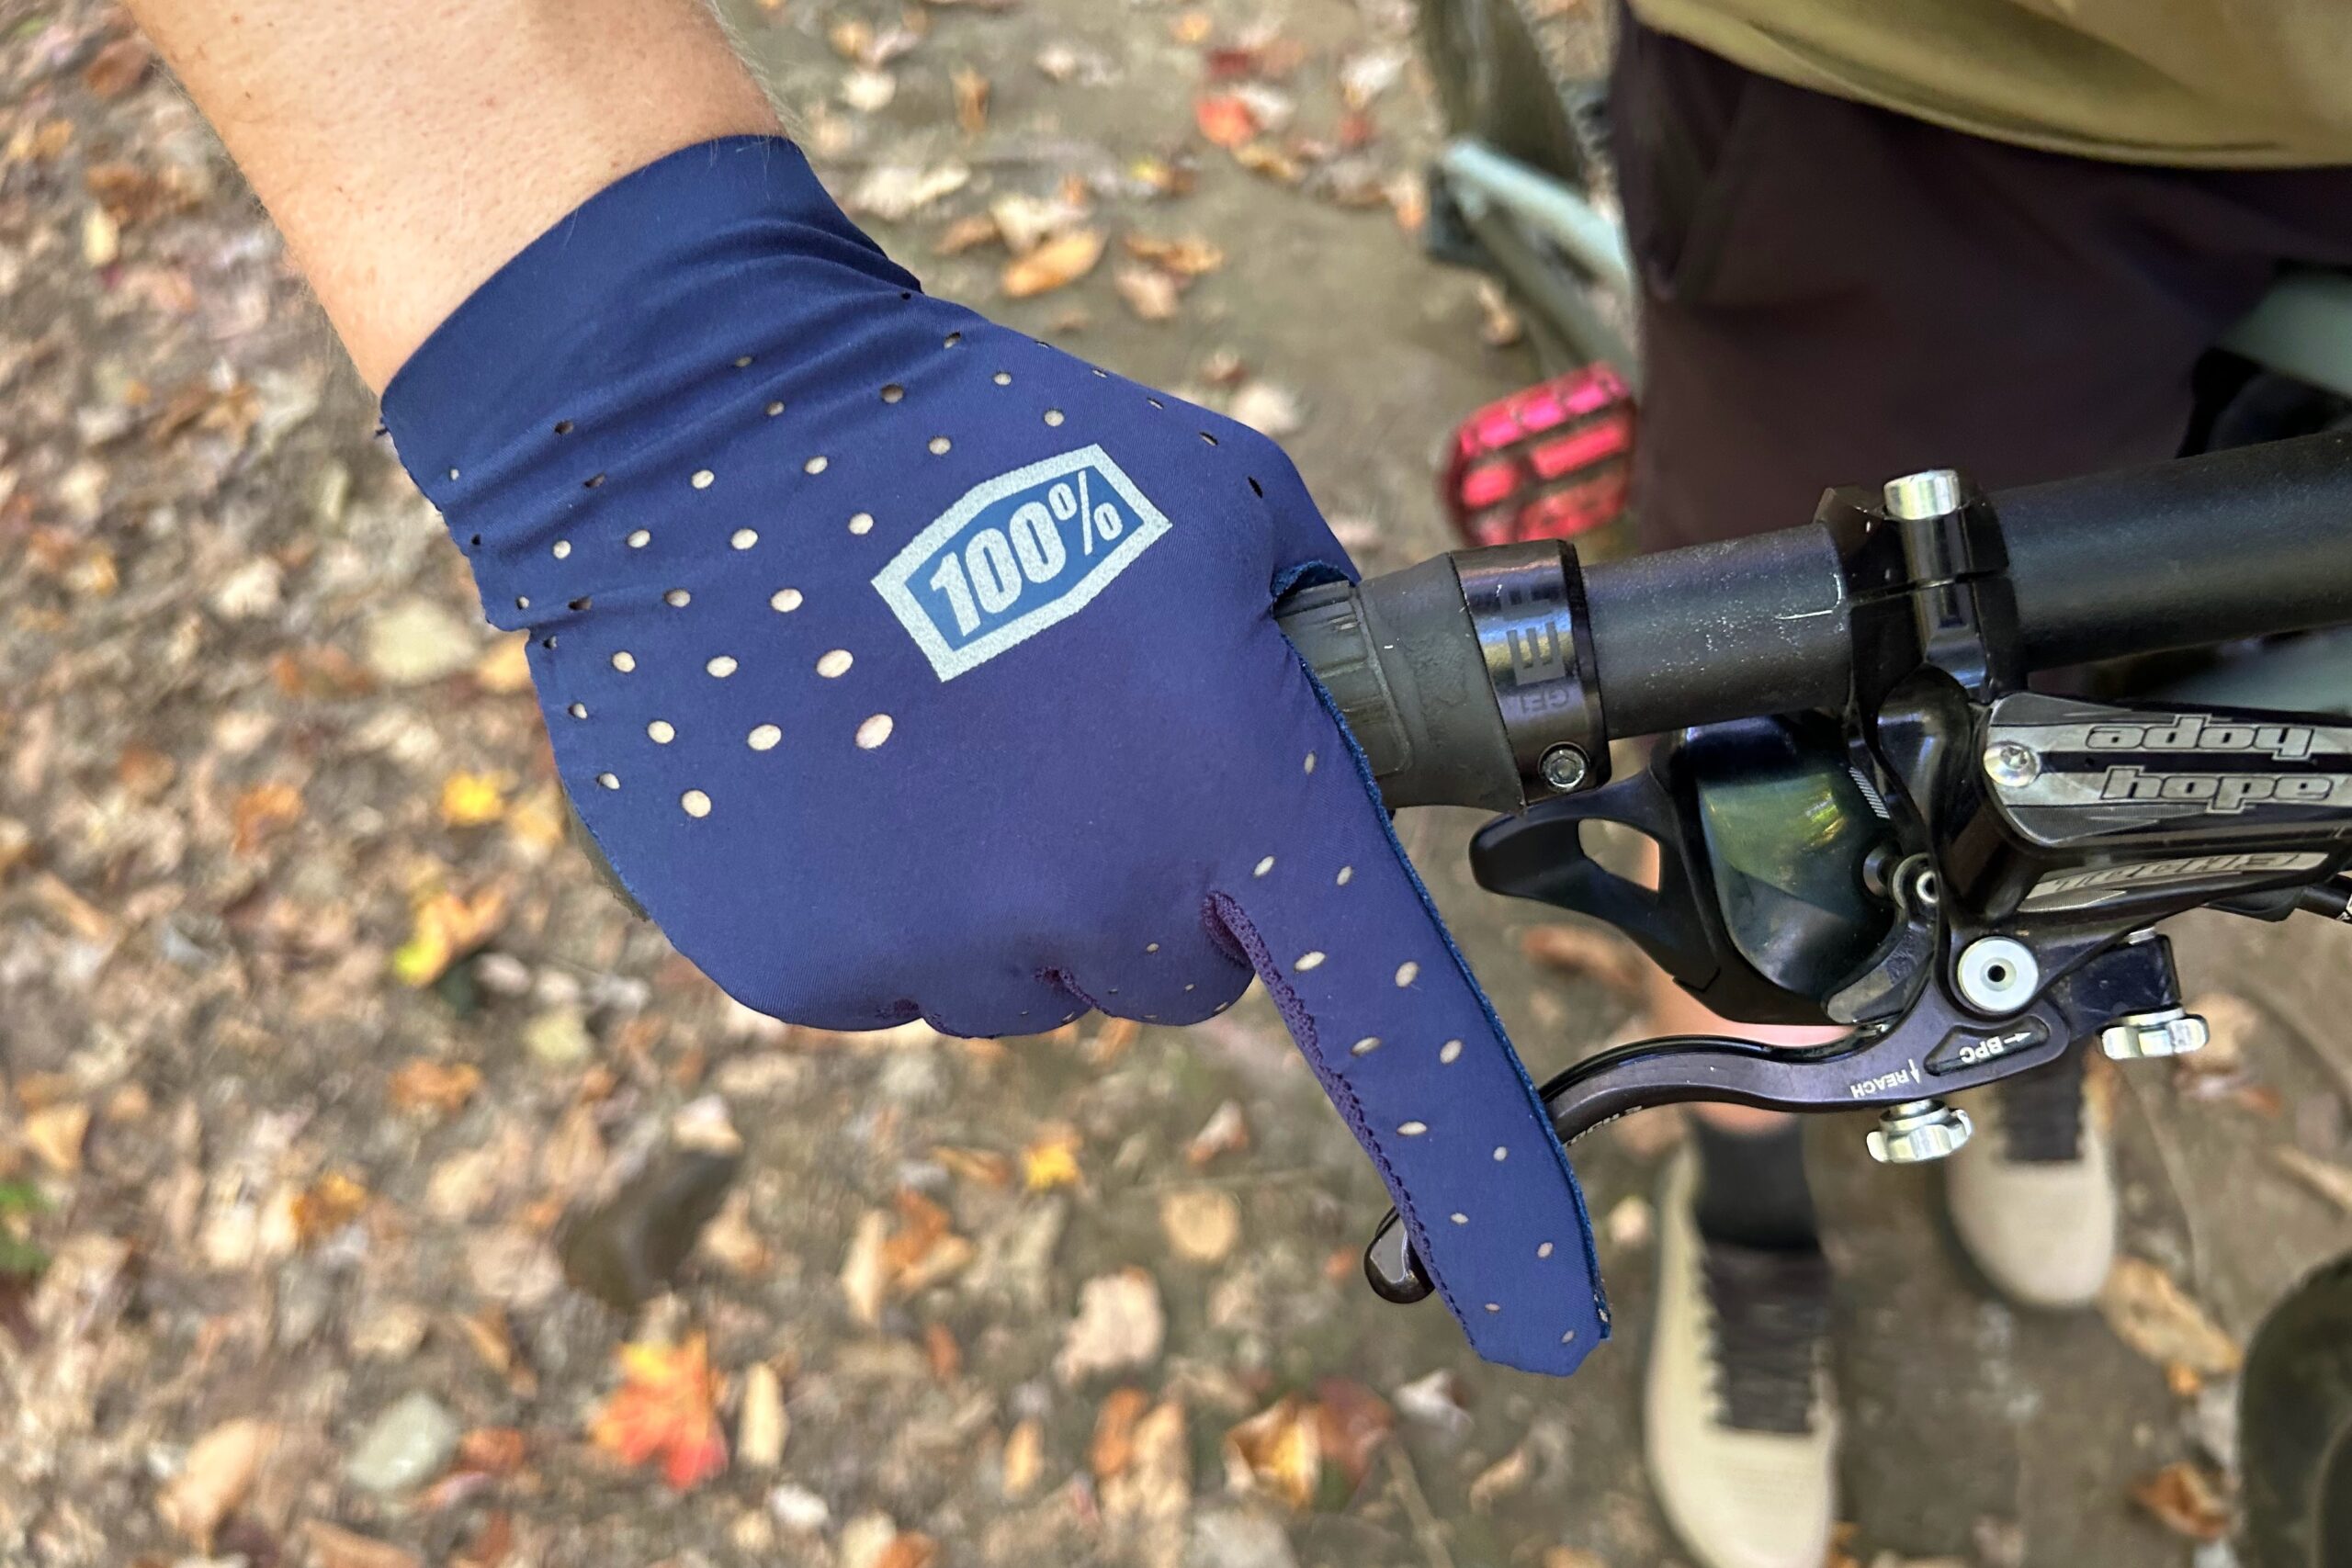 The 100% Sling lightweight mountain bike gloves